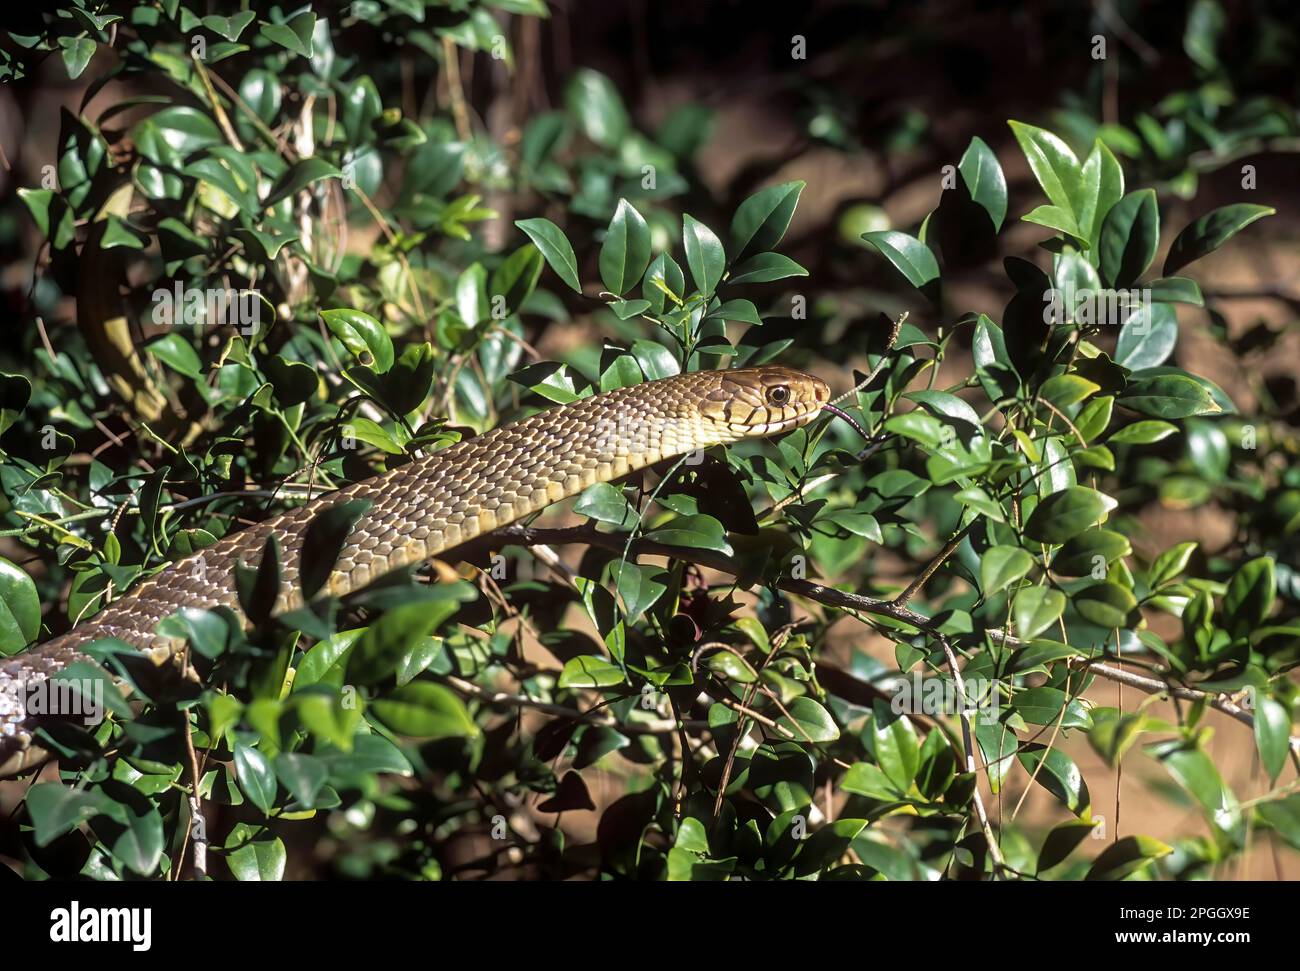 Serpent de rat indien (Ptyas mucosus) Tamil Nadu, Inde du Sud, Inde, Asie Banque D'Images